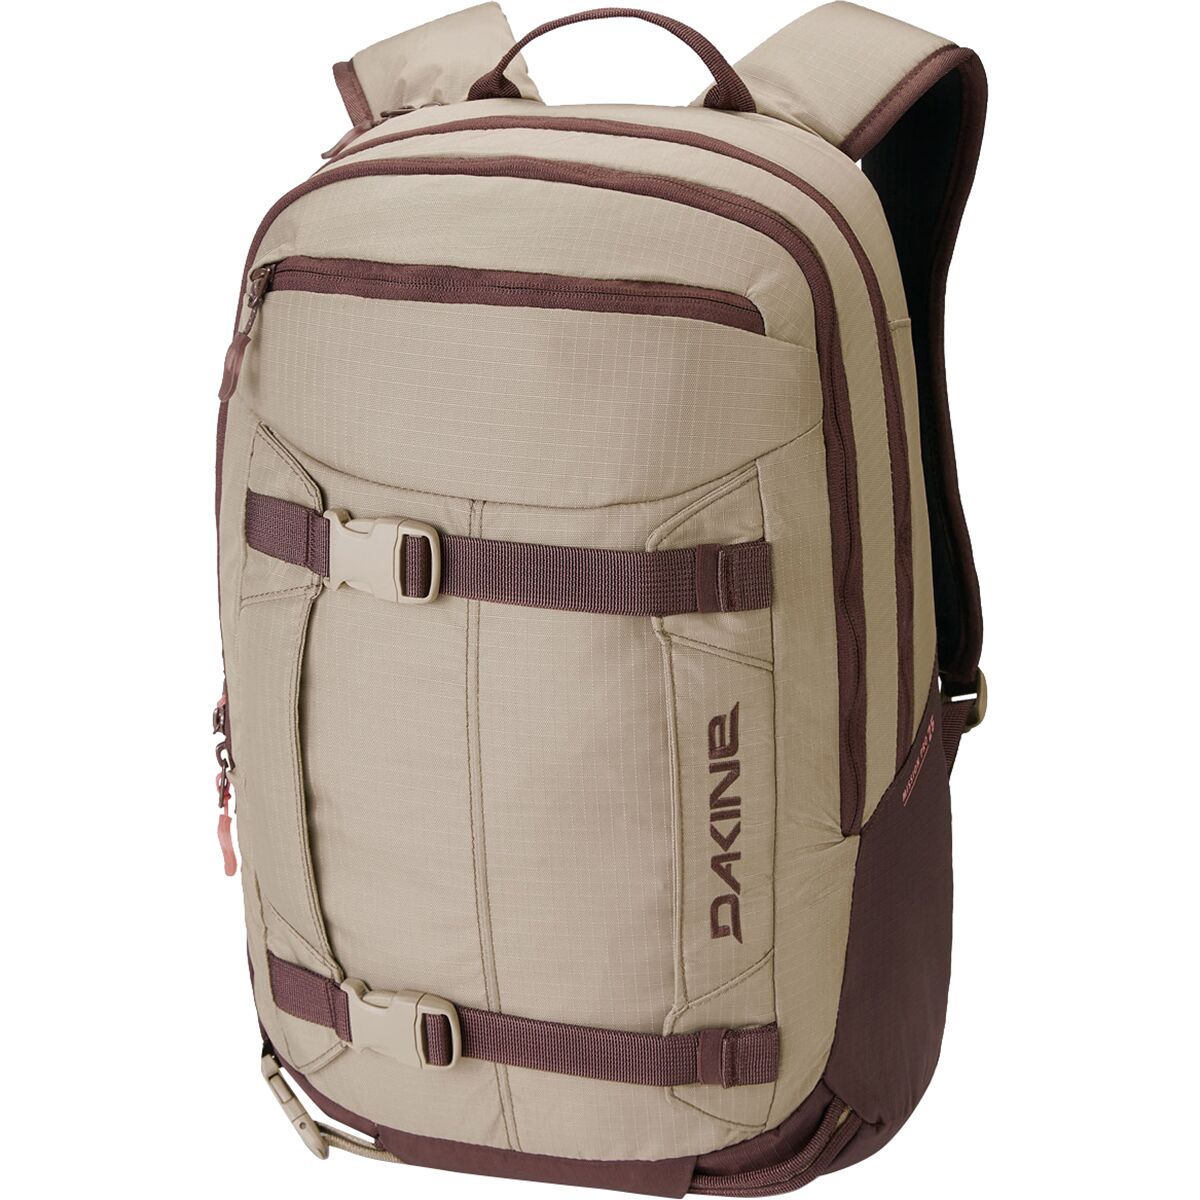 Mission Pro 25L Backpack - Women